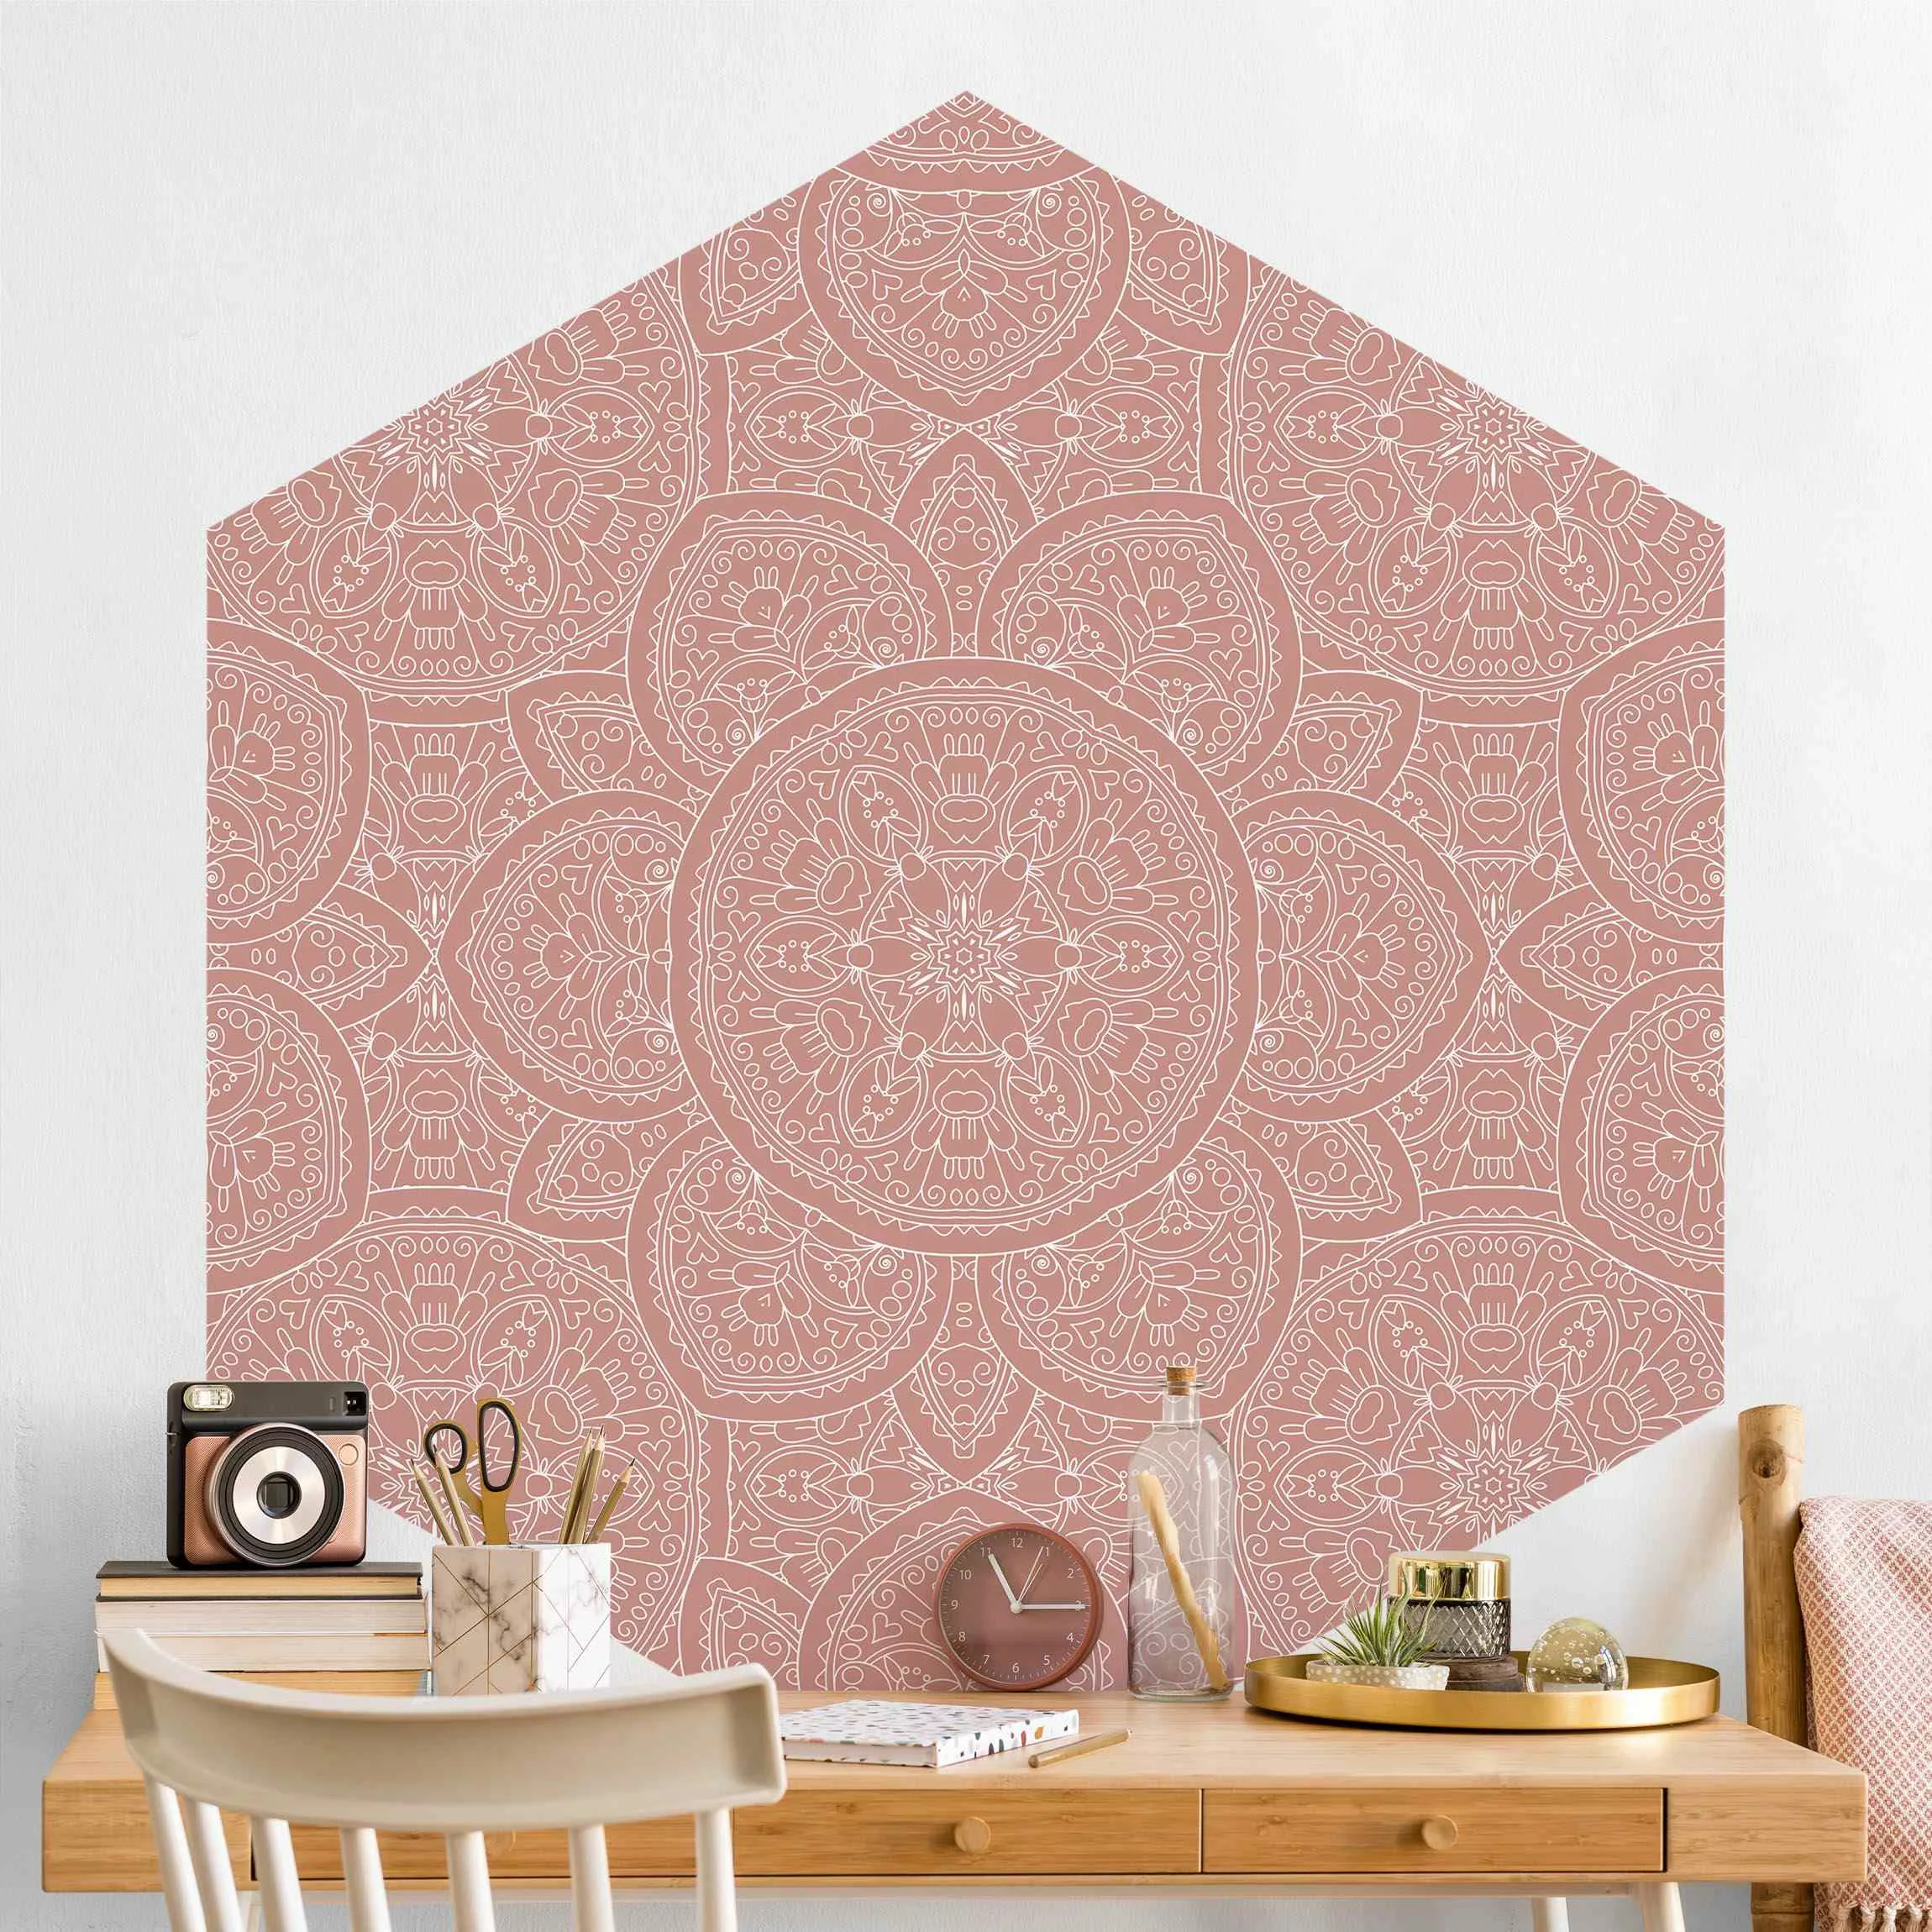 Hexagon Mustertapete selbstklebend Große Mandala Muster in Altrosa günstig online kaufen